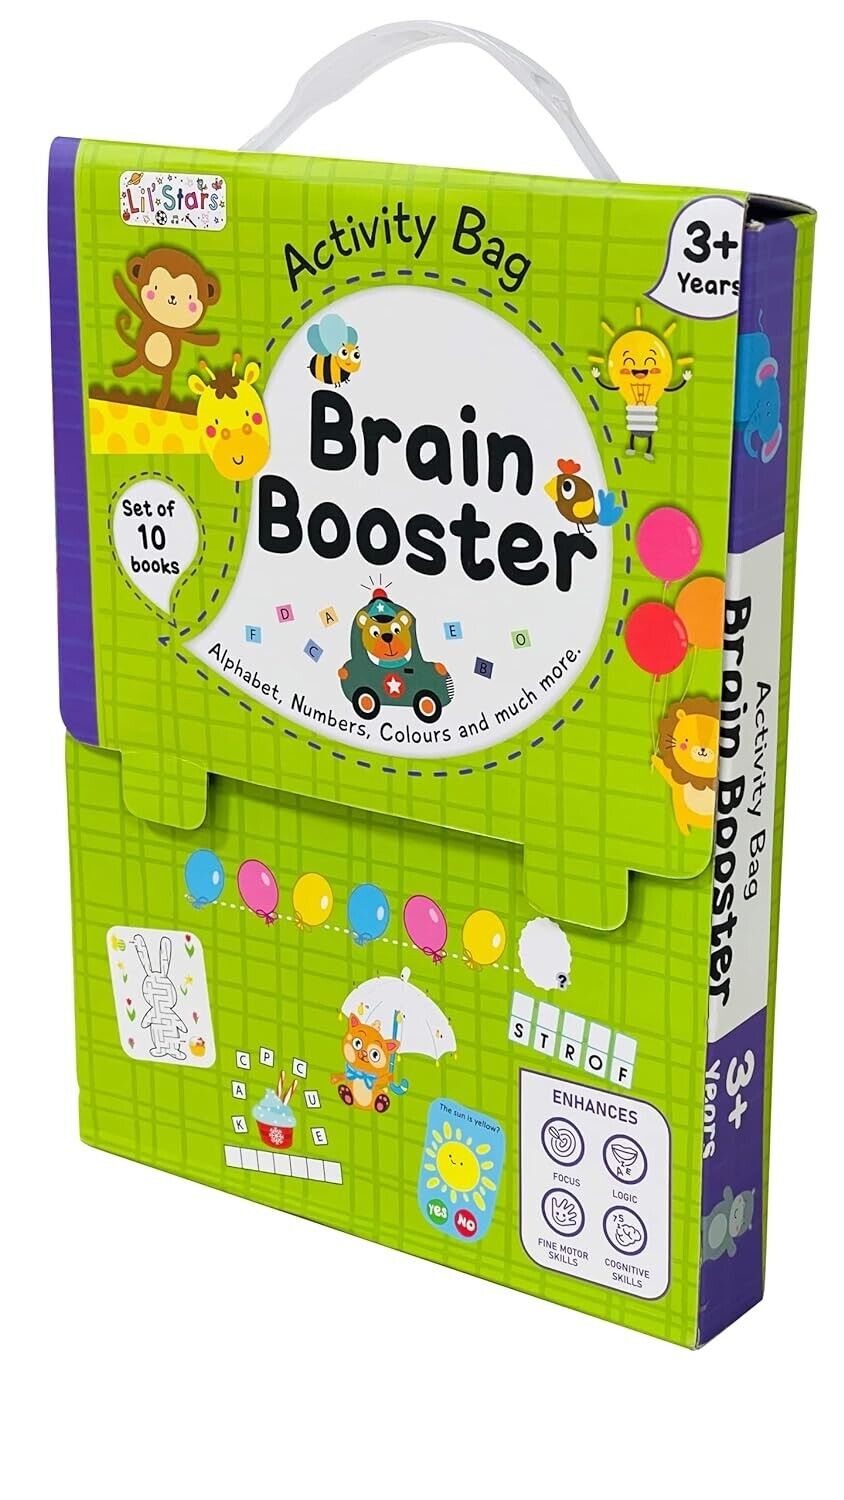 Brain Booster Activity Bag for Kids & Children, Set of 10 Books, Combo Pack